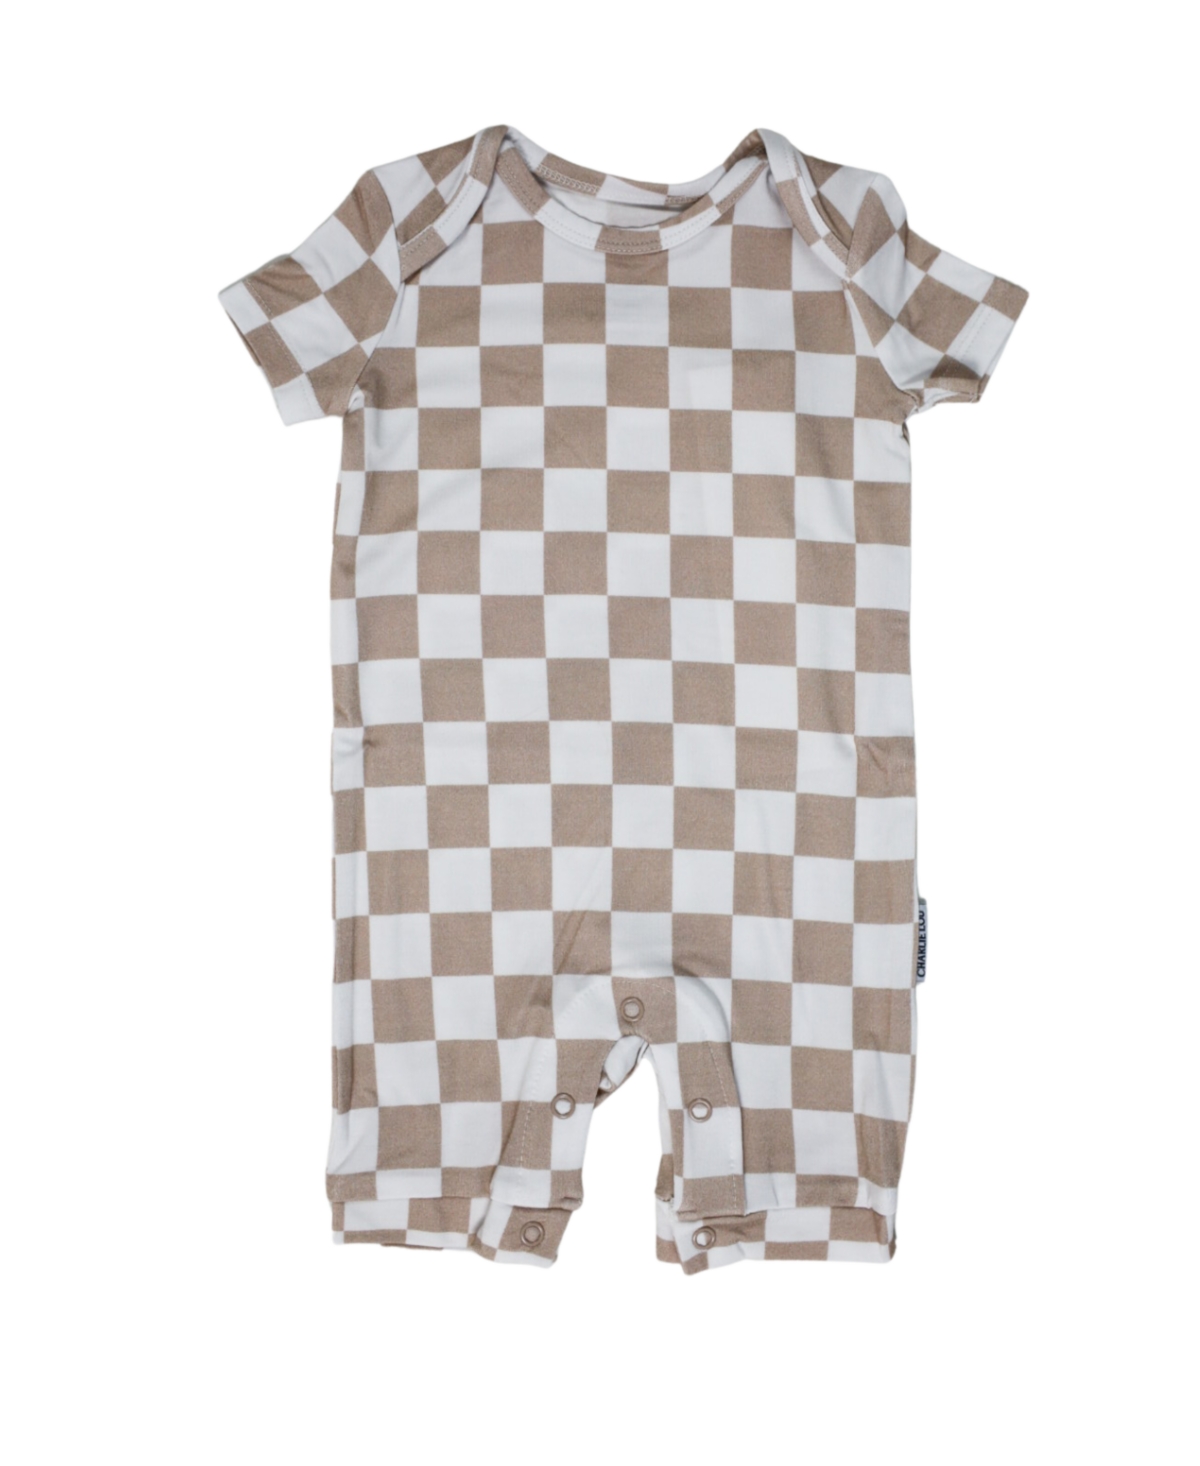 Charlie Lou Baby Unisex Checkered Shortie Romper - Baby In Checkered Beige